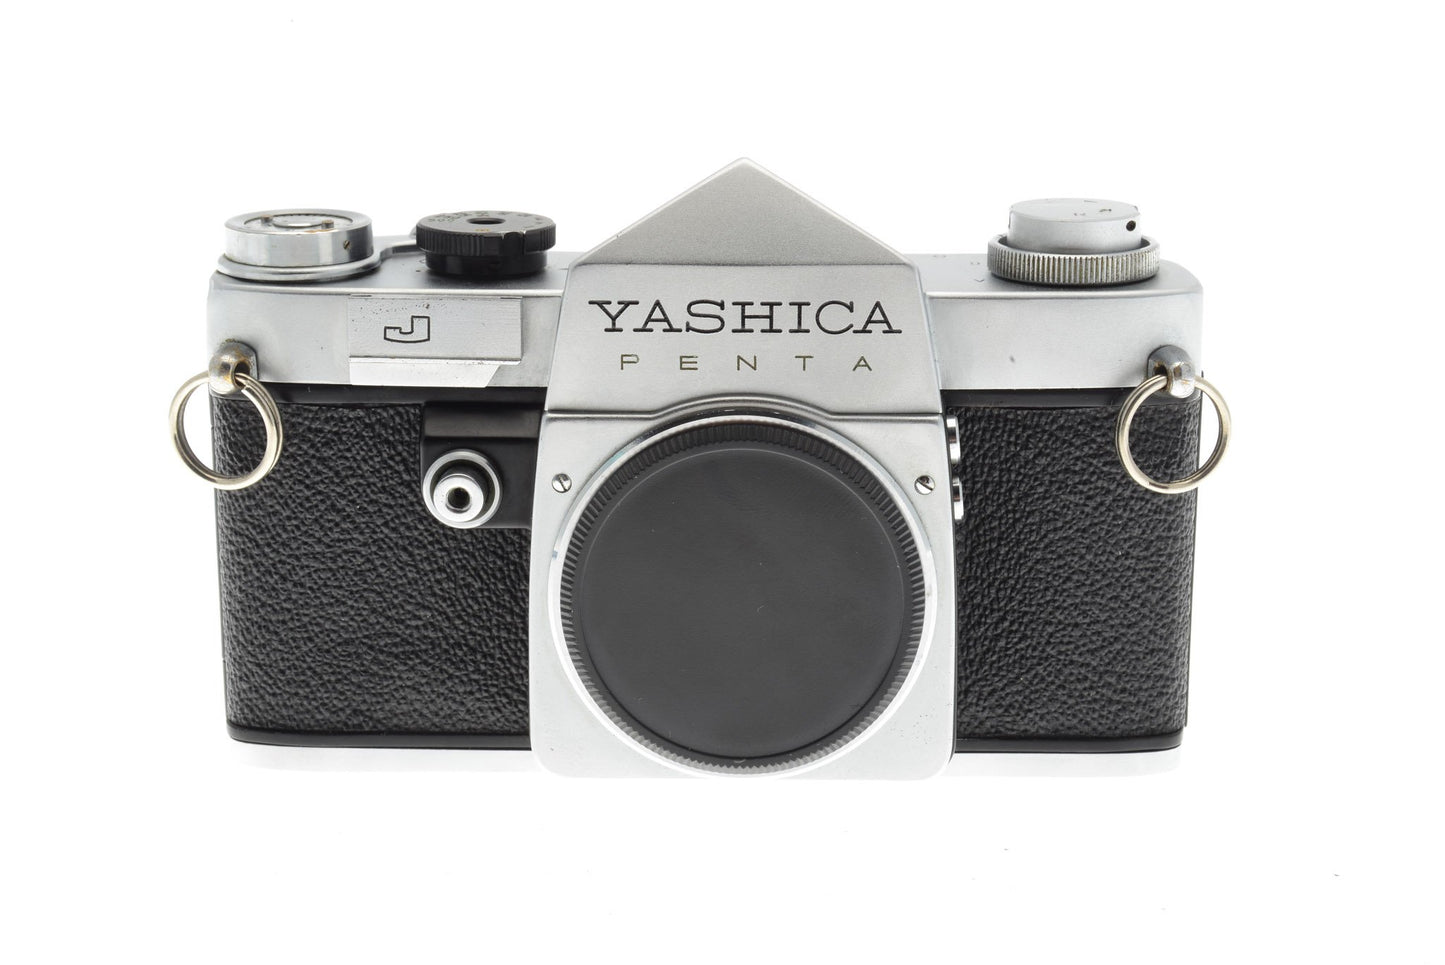 Yashica Penta J - Camera